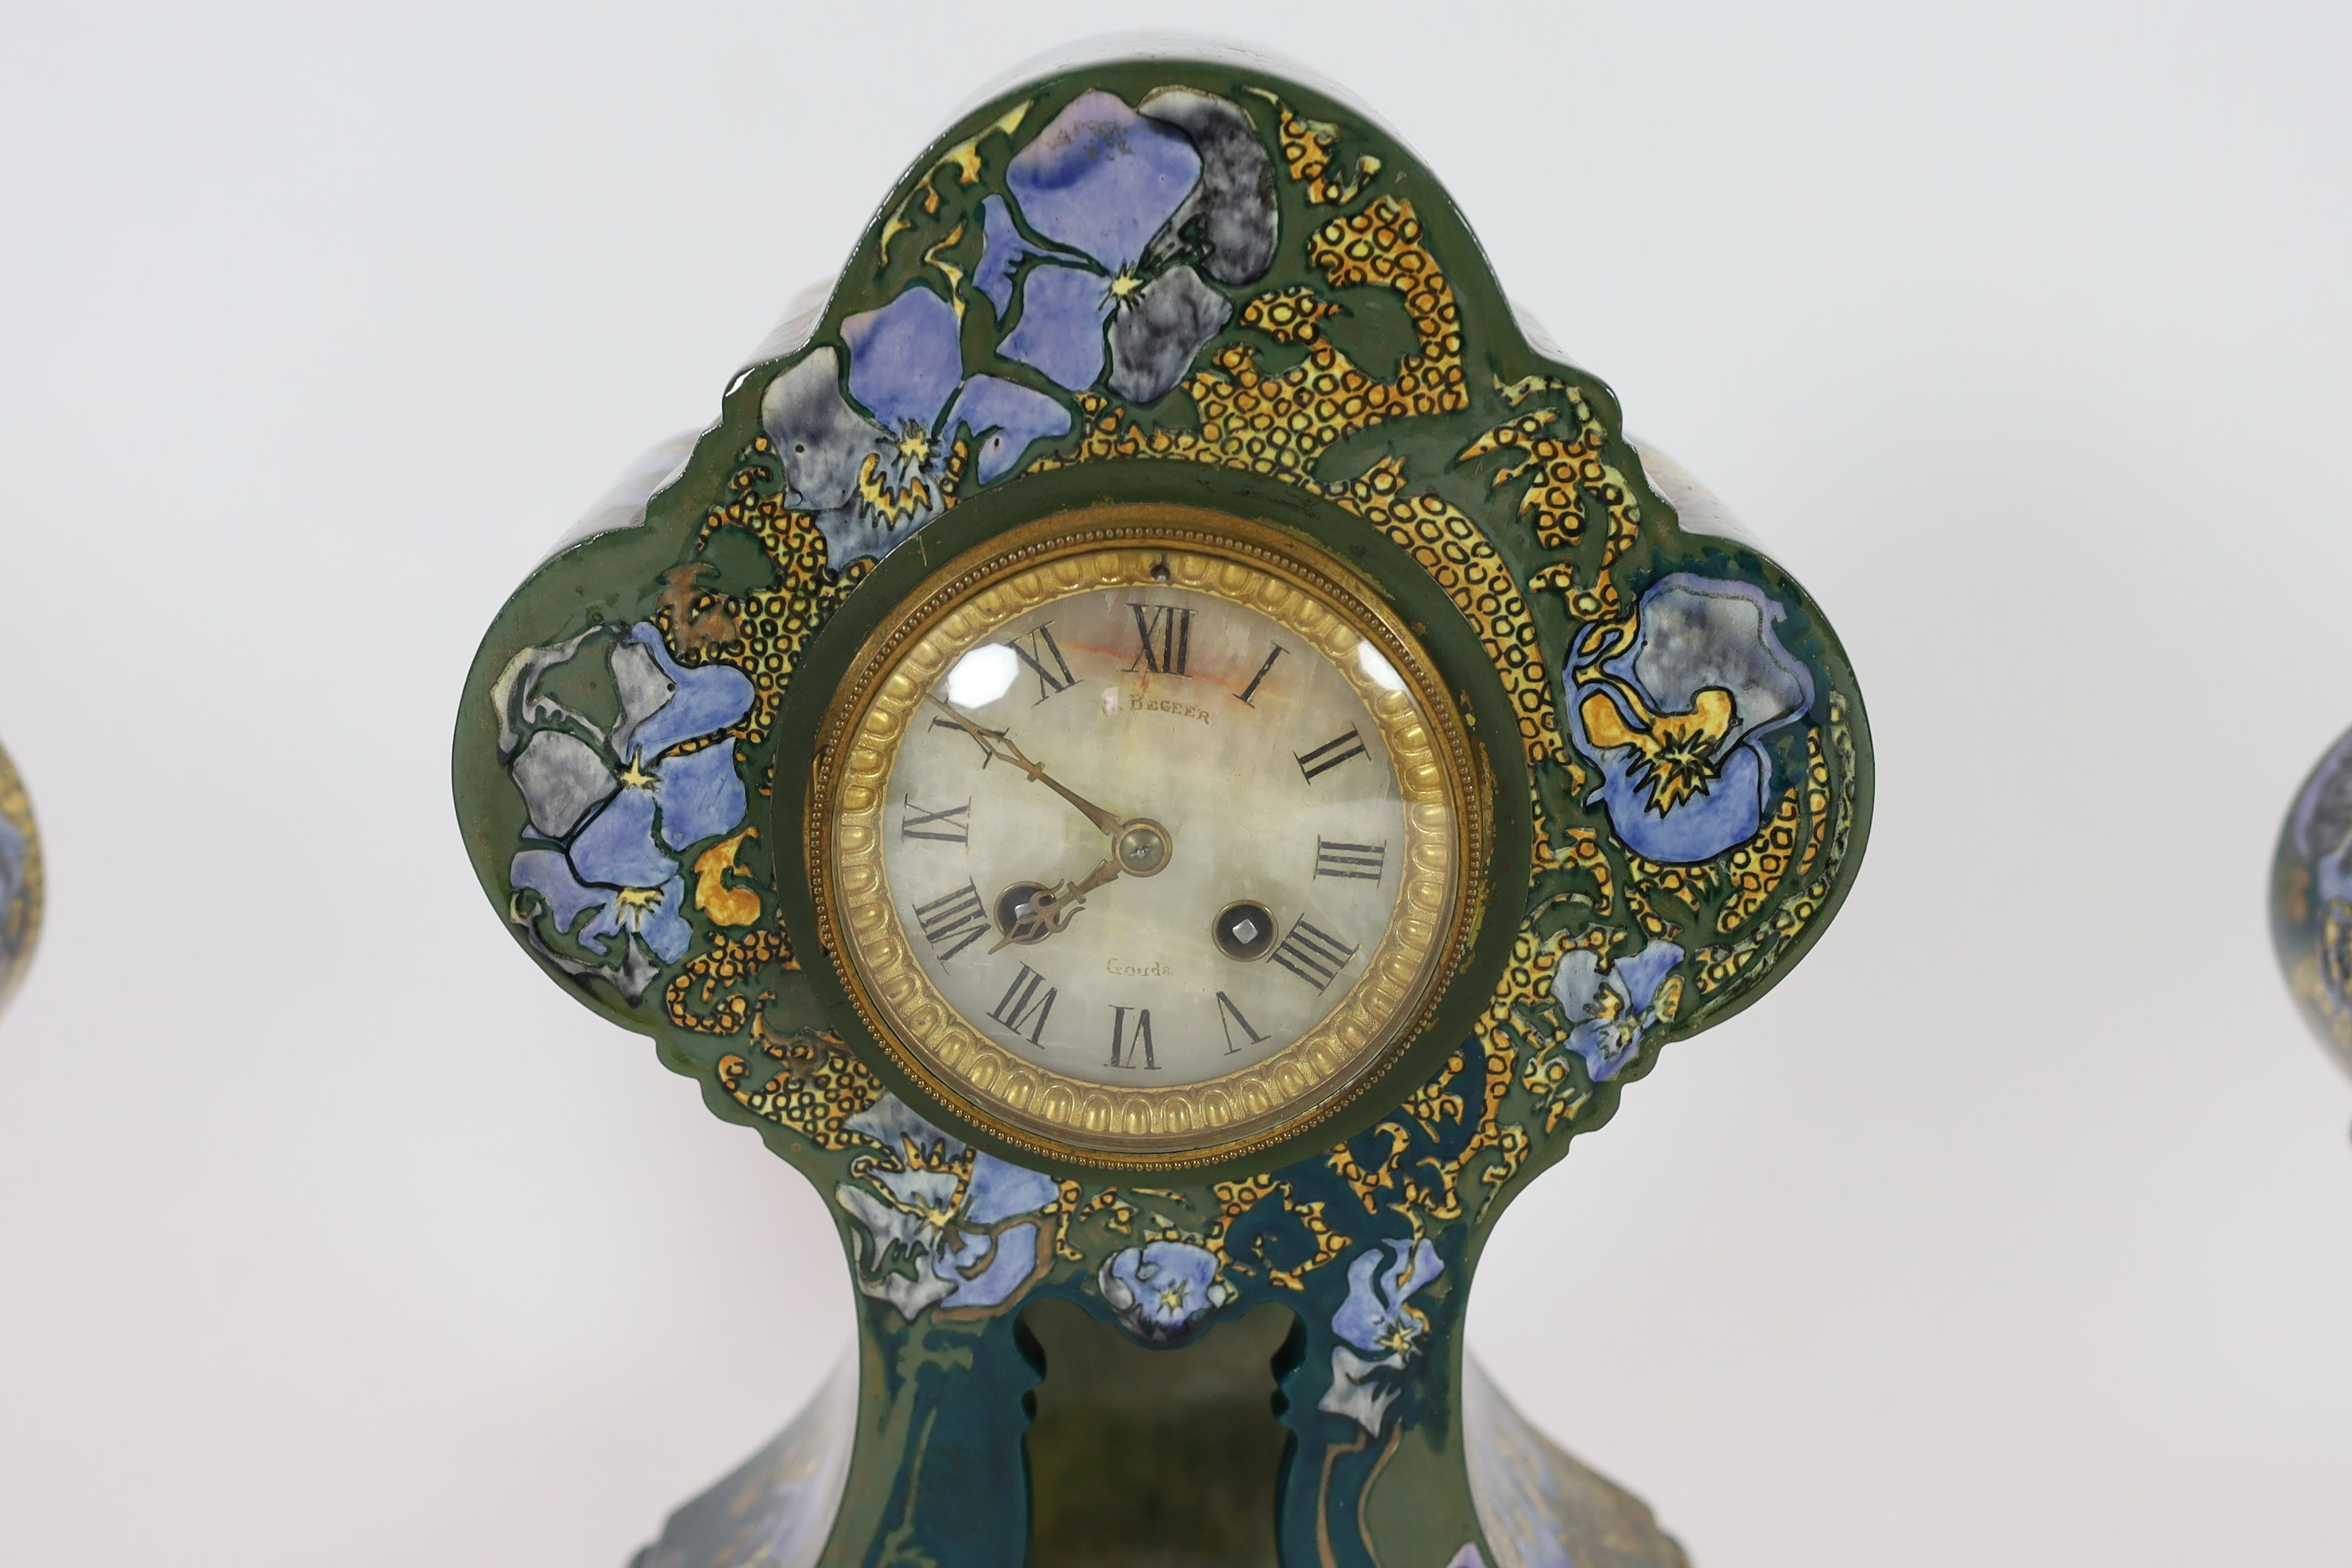 A Rozenberg Art Nouveau earthenware three piece clock garniture, clock 45 cm high